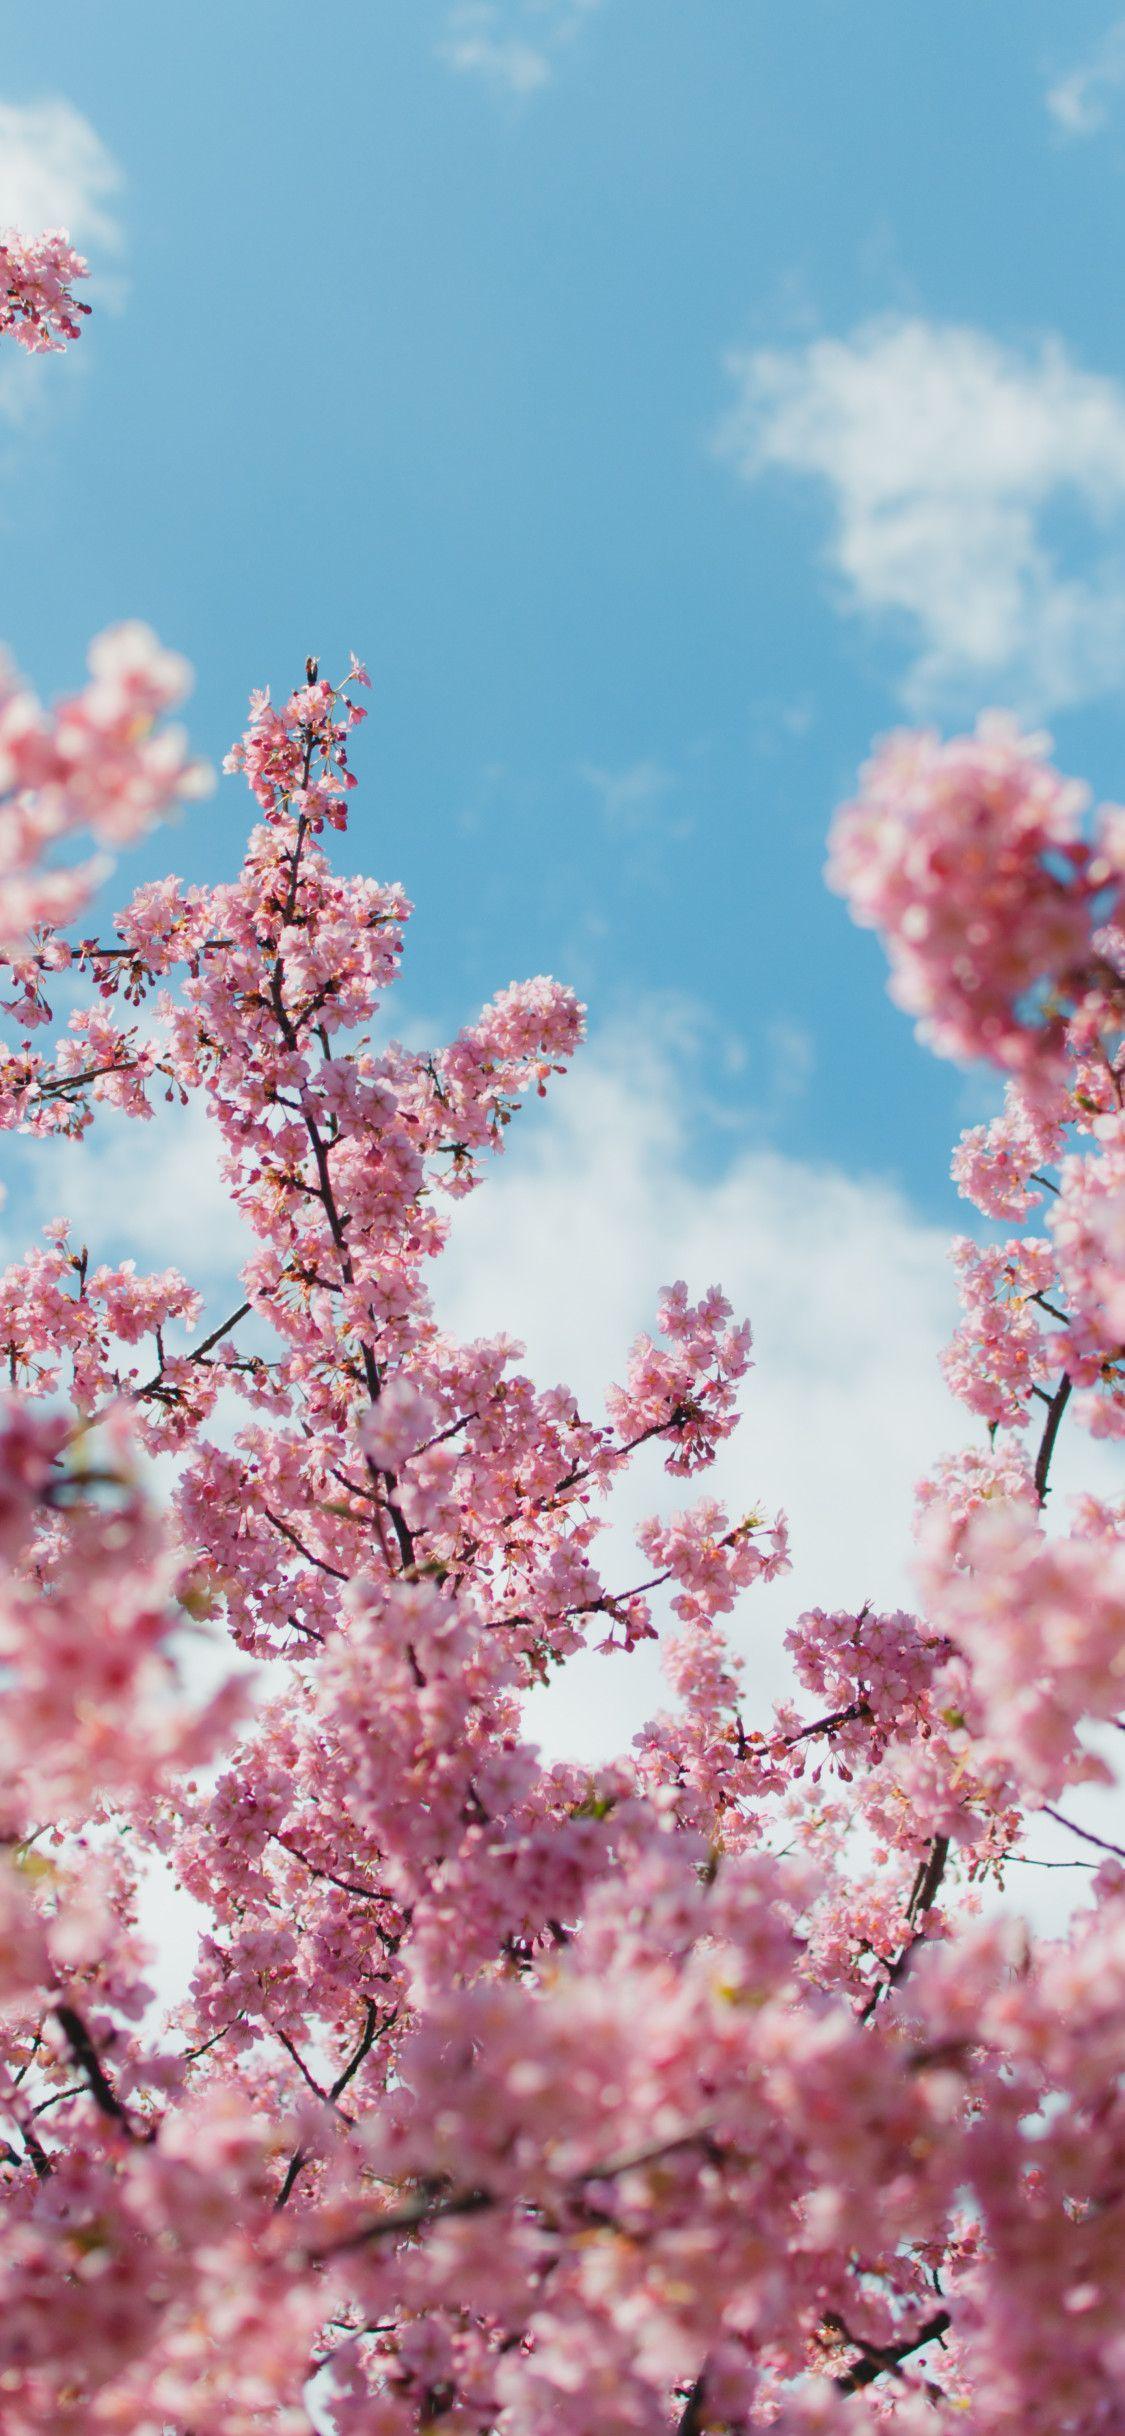 Cherry Blossom 4K Wallpaper : 4K Cherry Blossom Wallpapers - Top Free